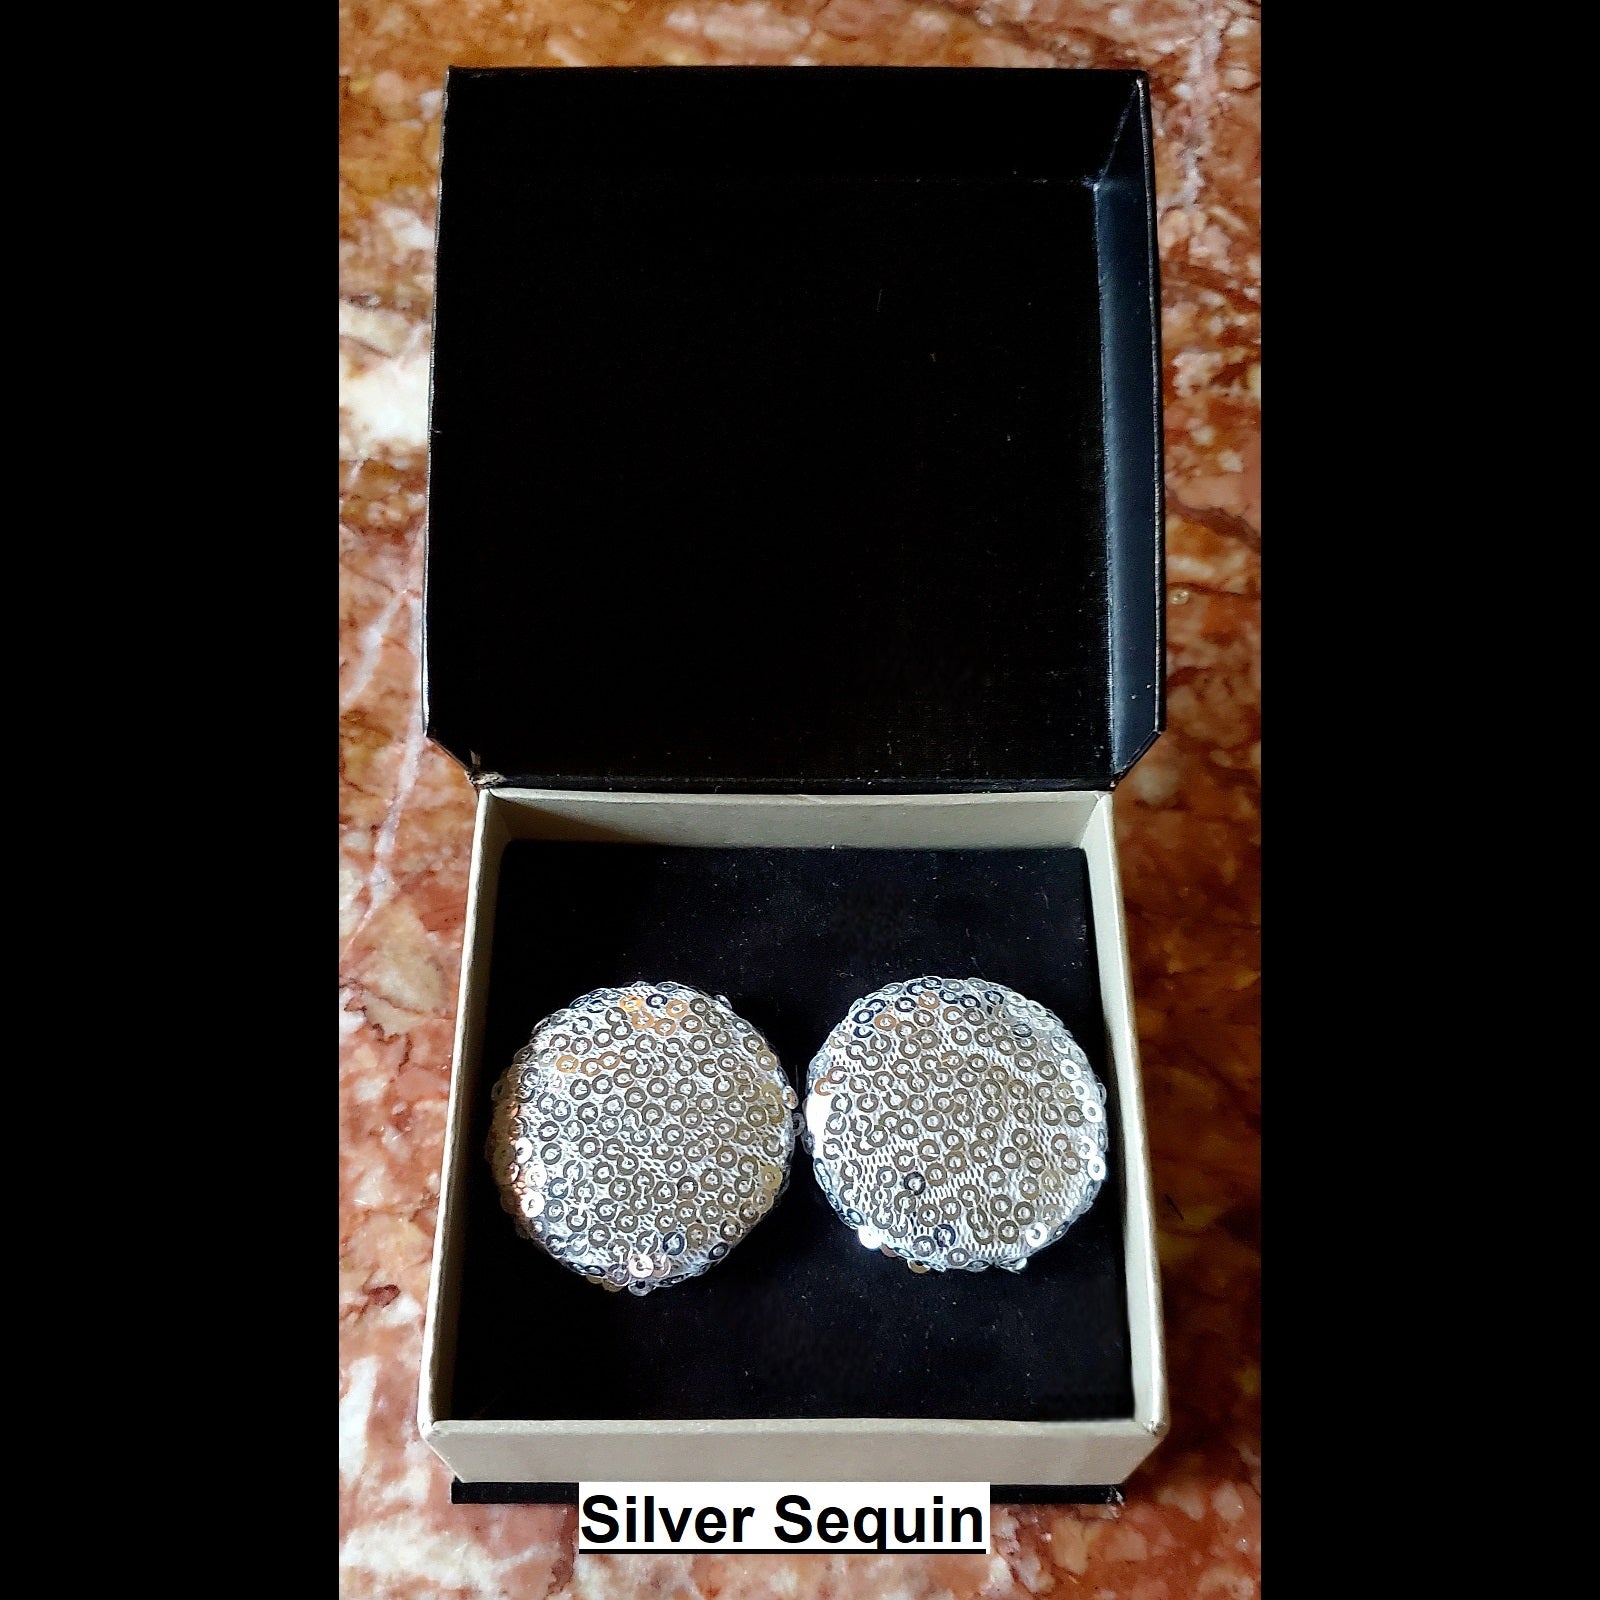 Silver sequin button earrings in jewelry box